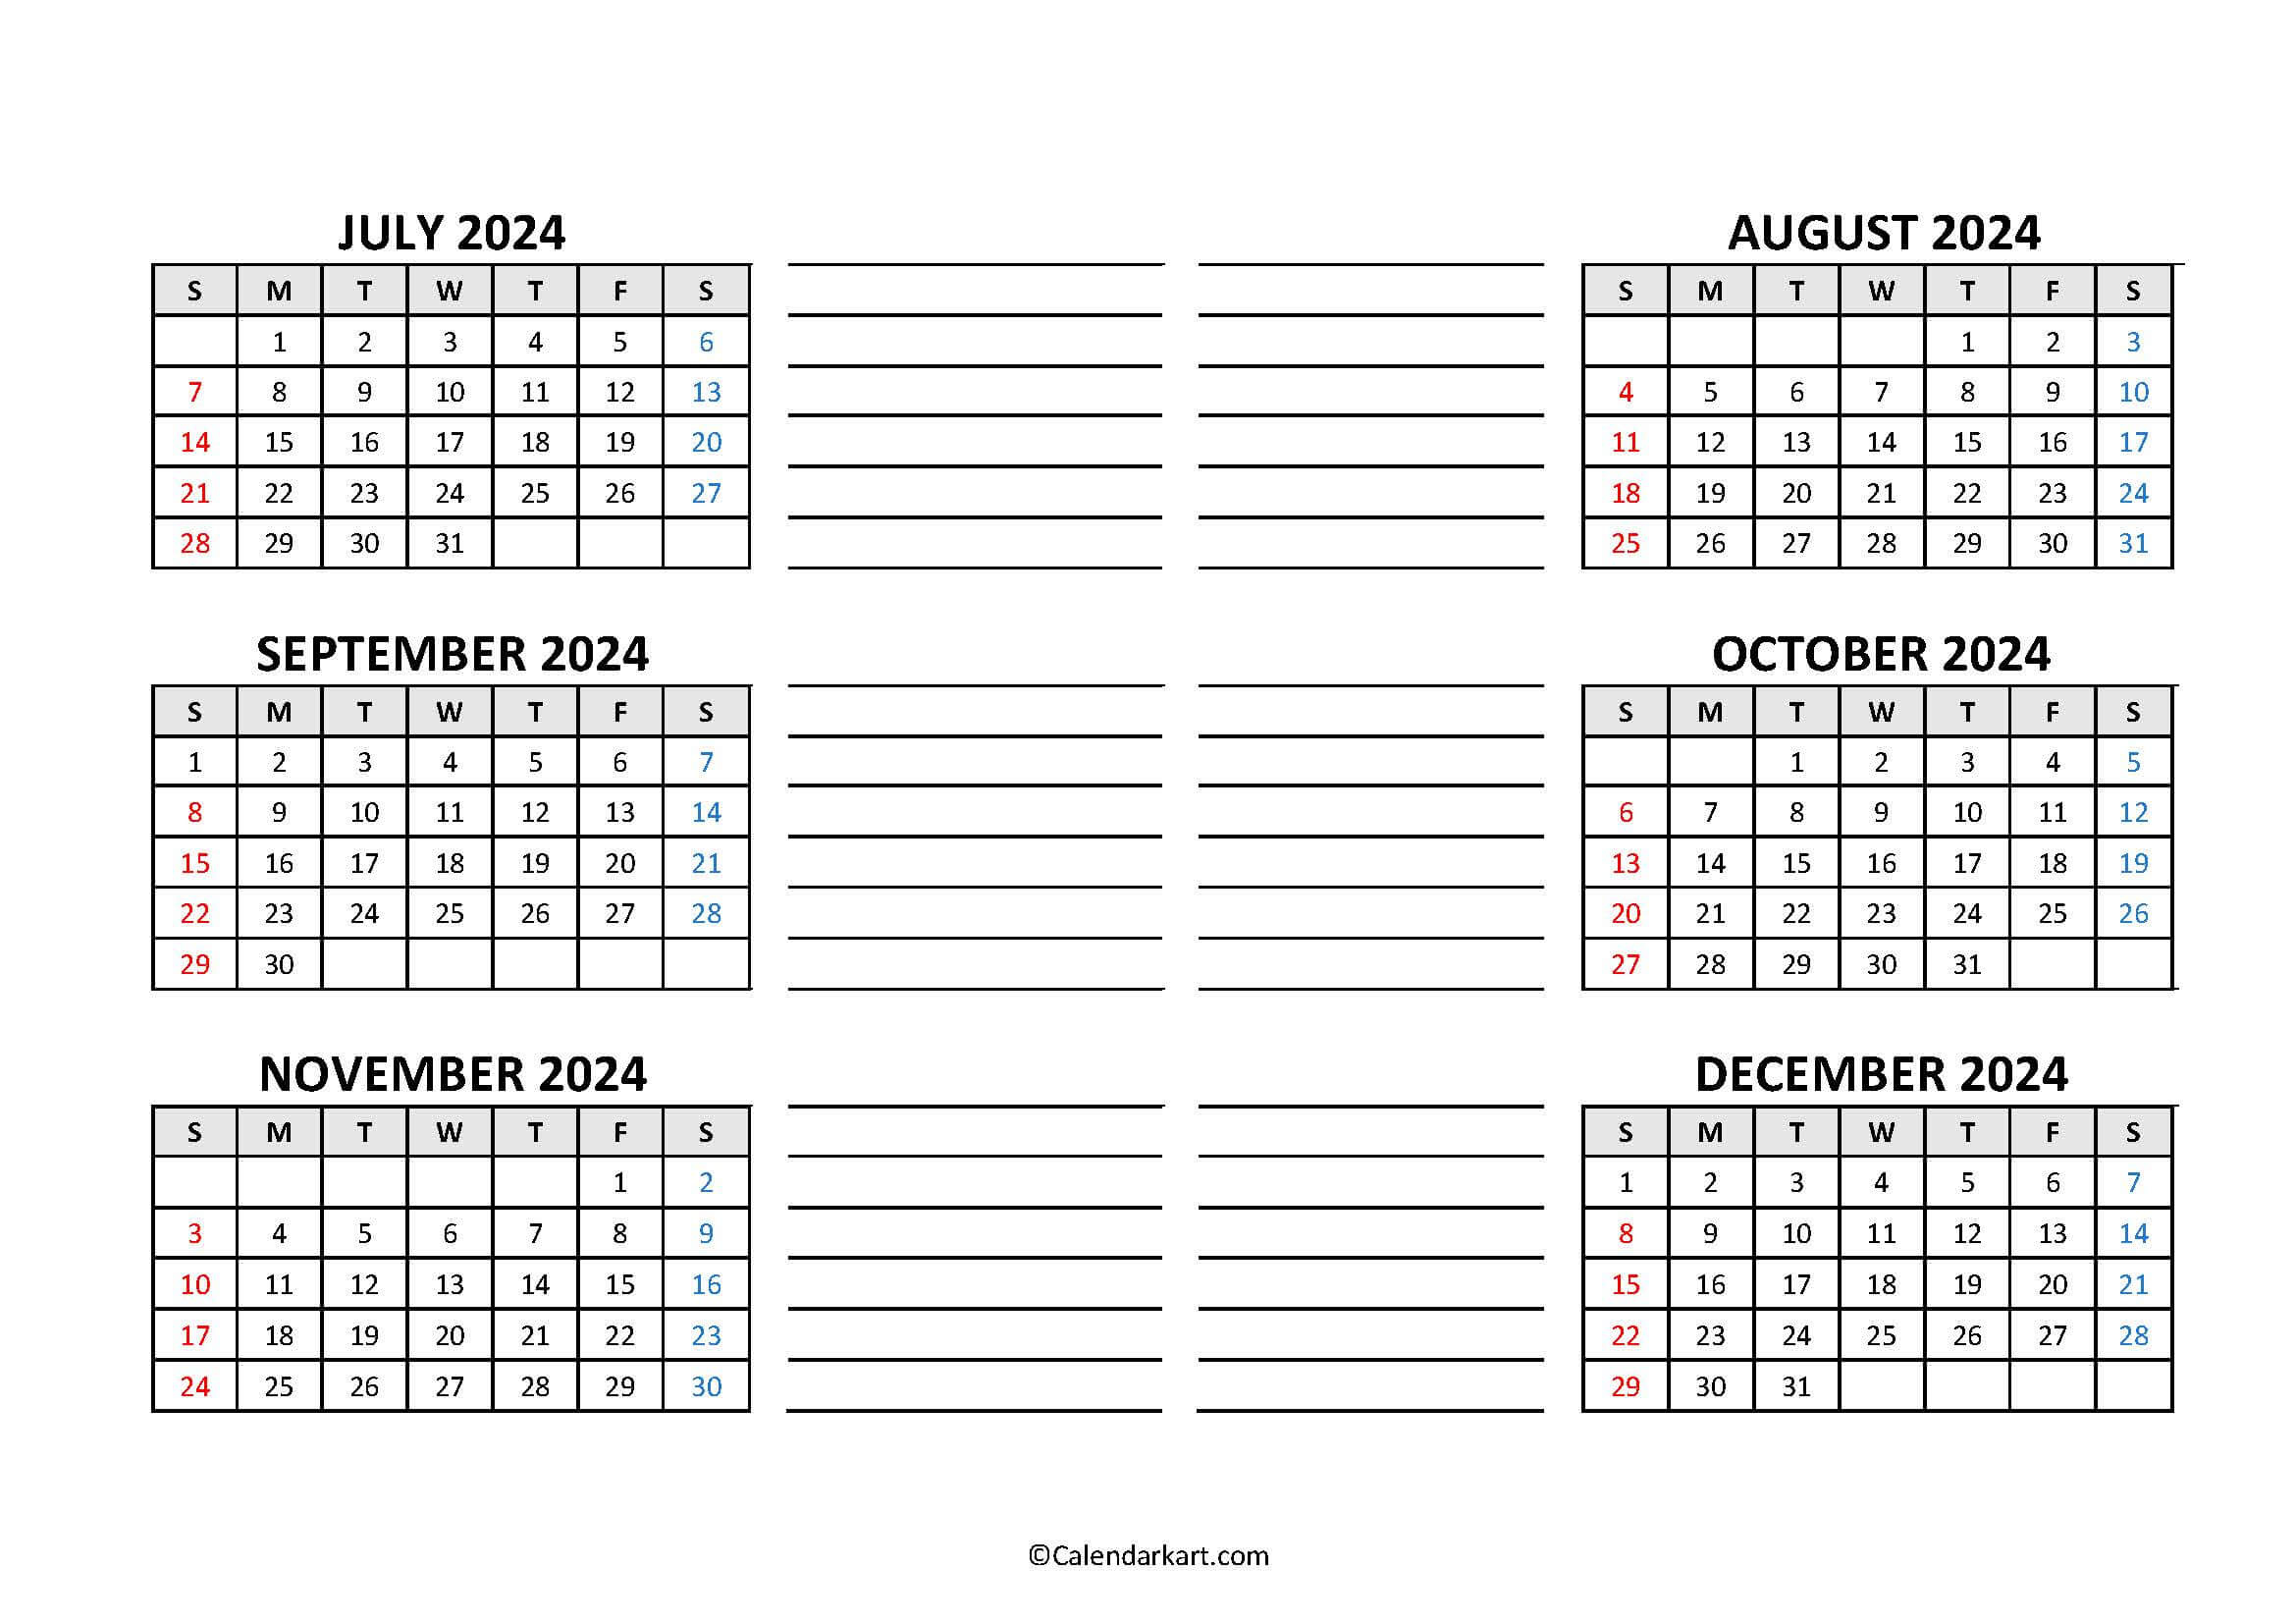 Free Printable Year At A Glance Calendar 2024 - Calendarkart regarding July - December 2024 Calendar